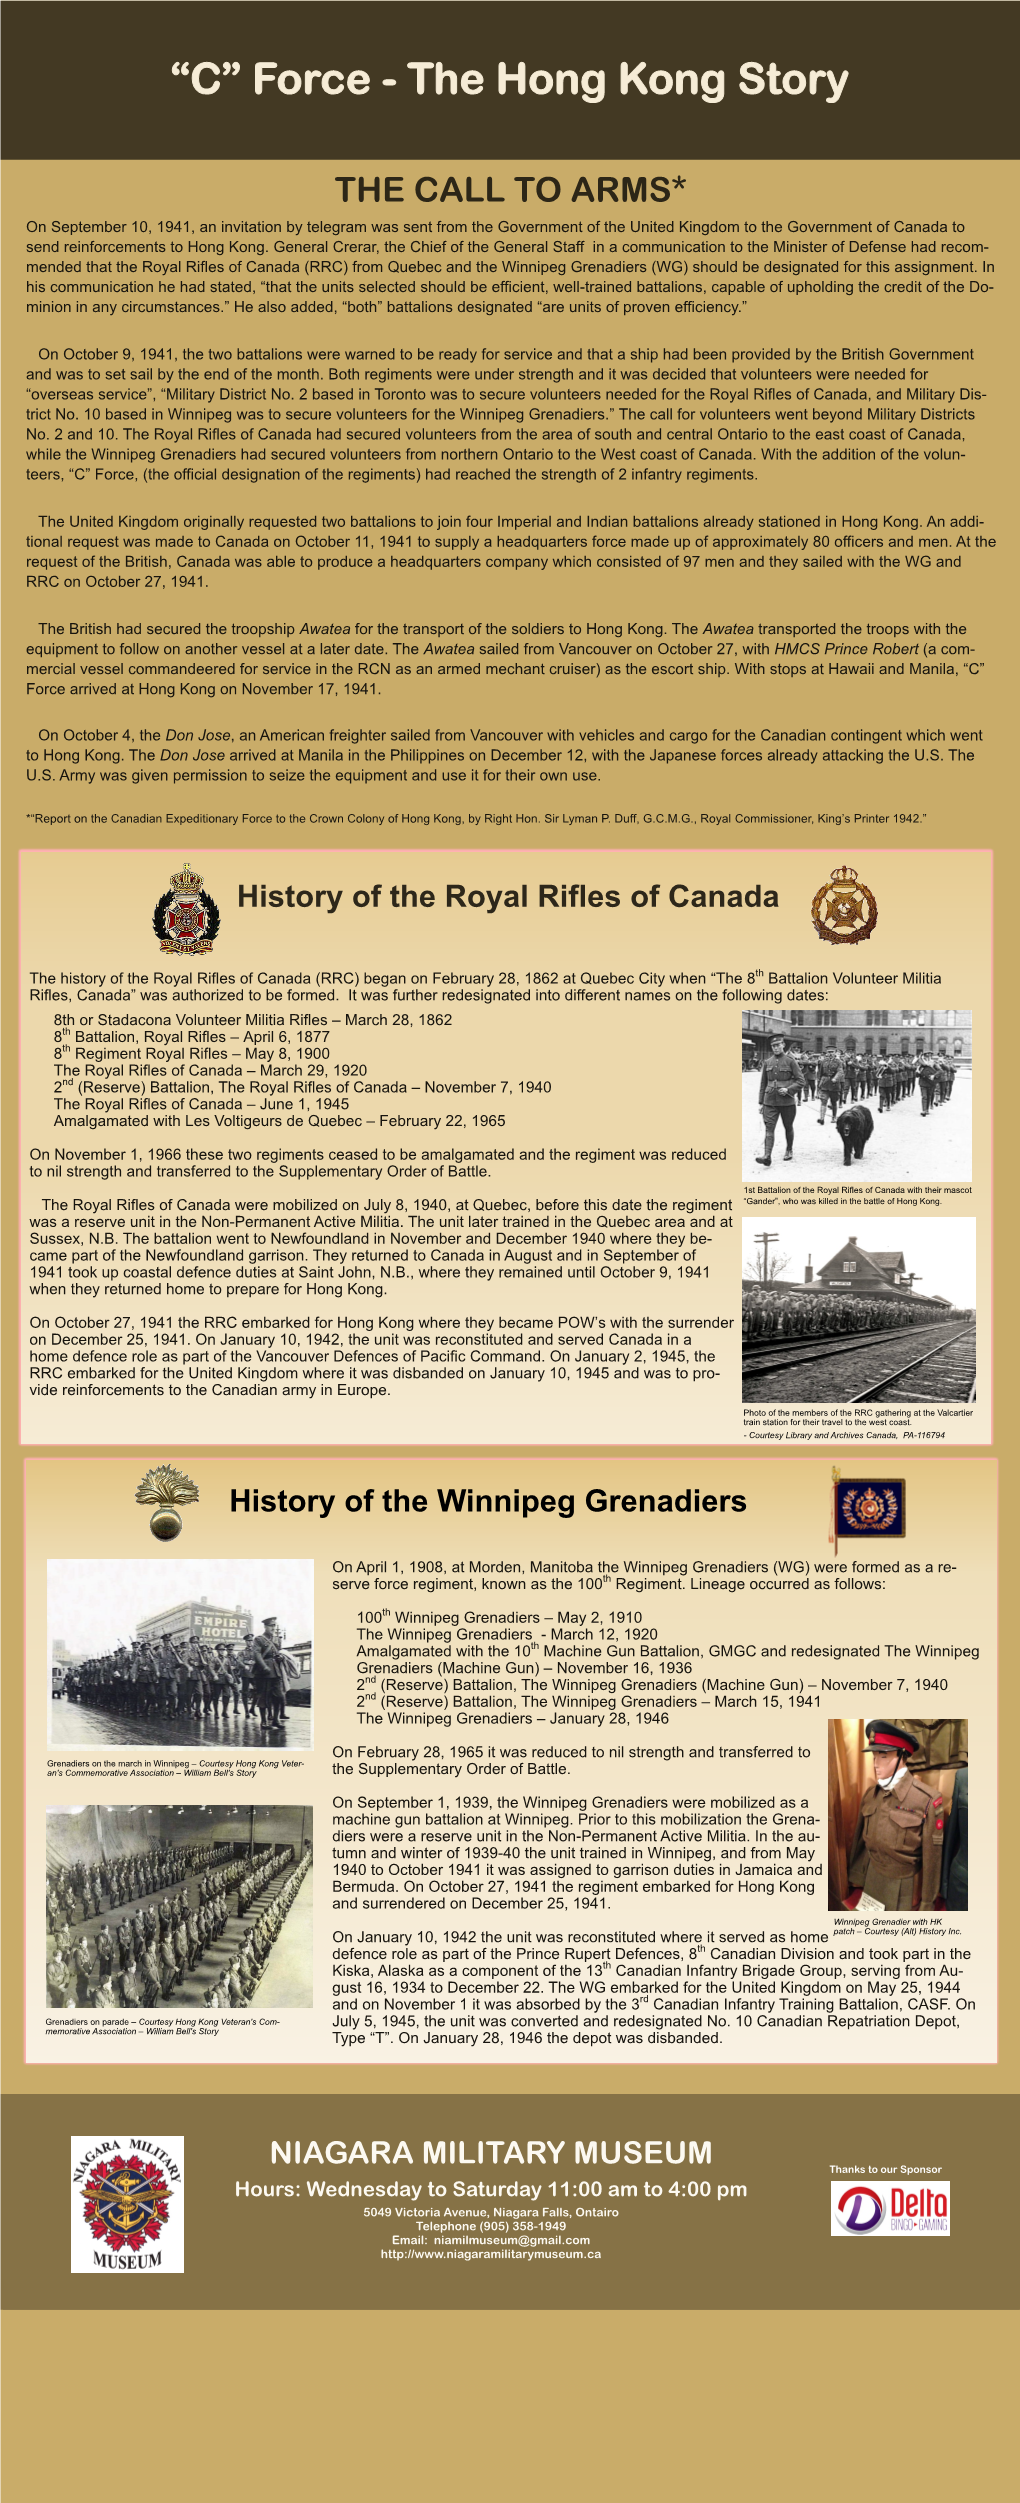 History of the Winnipeg Grenadiers